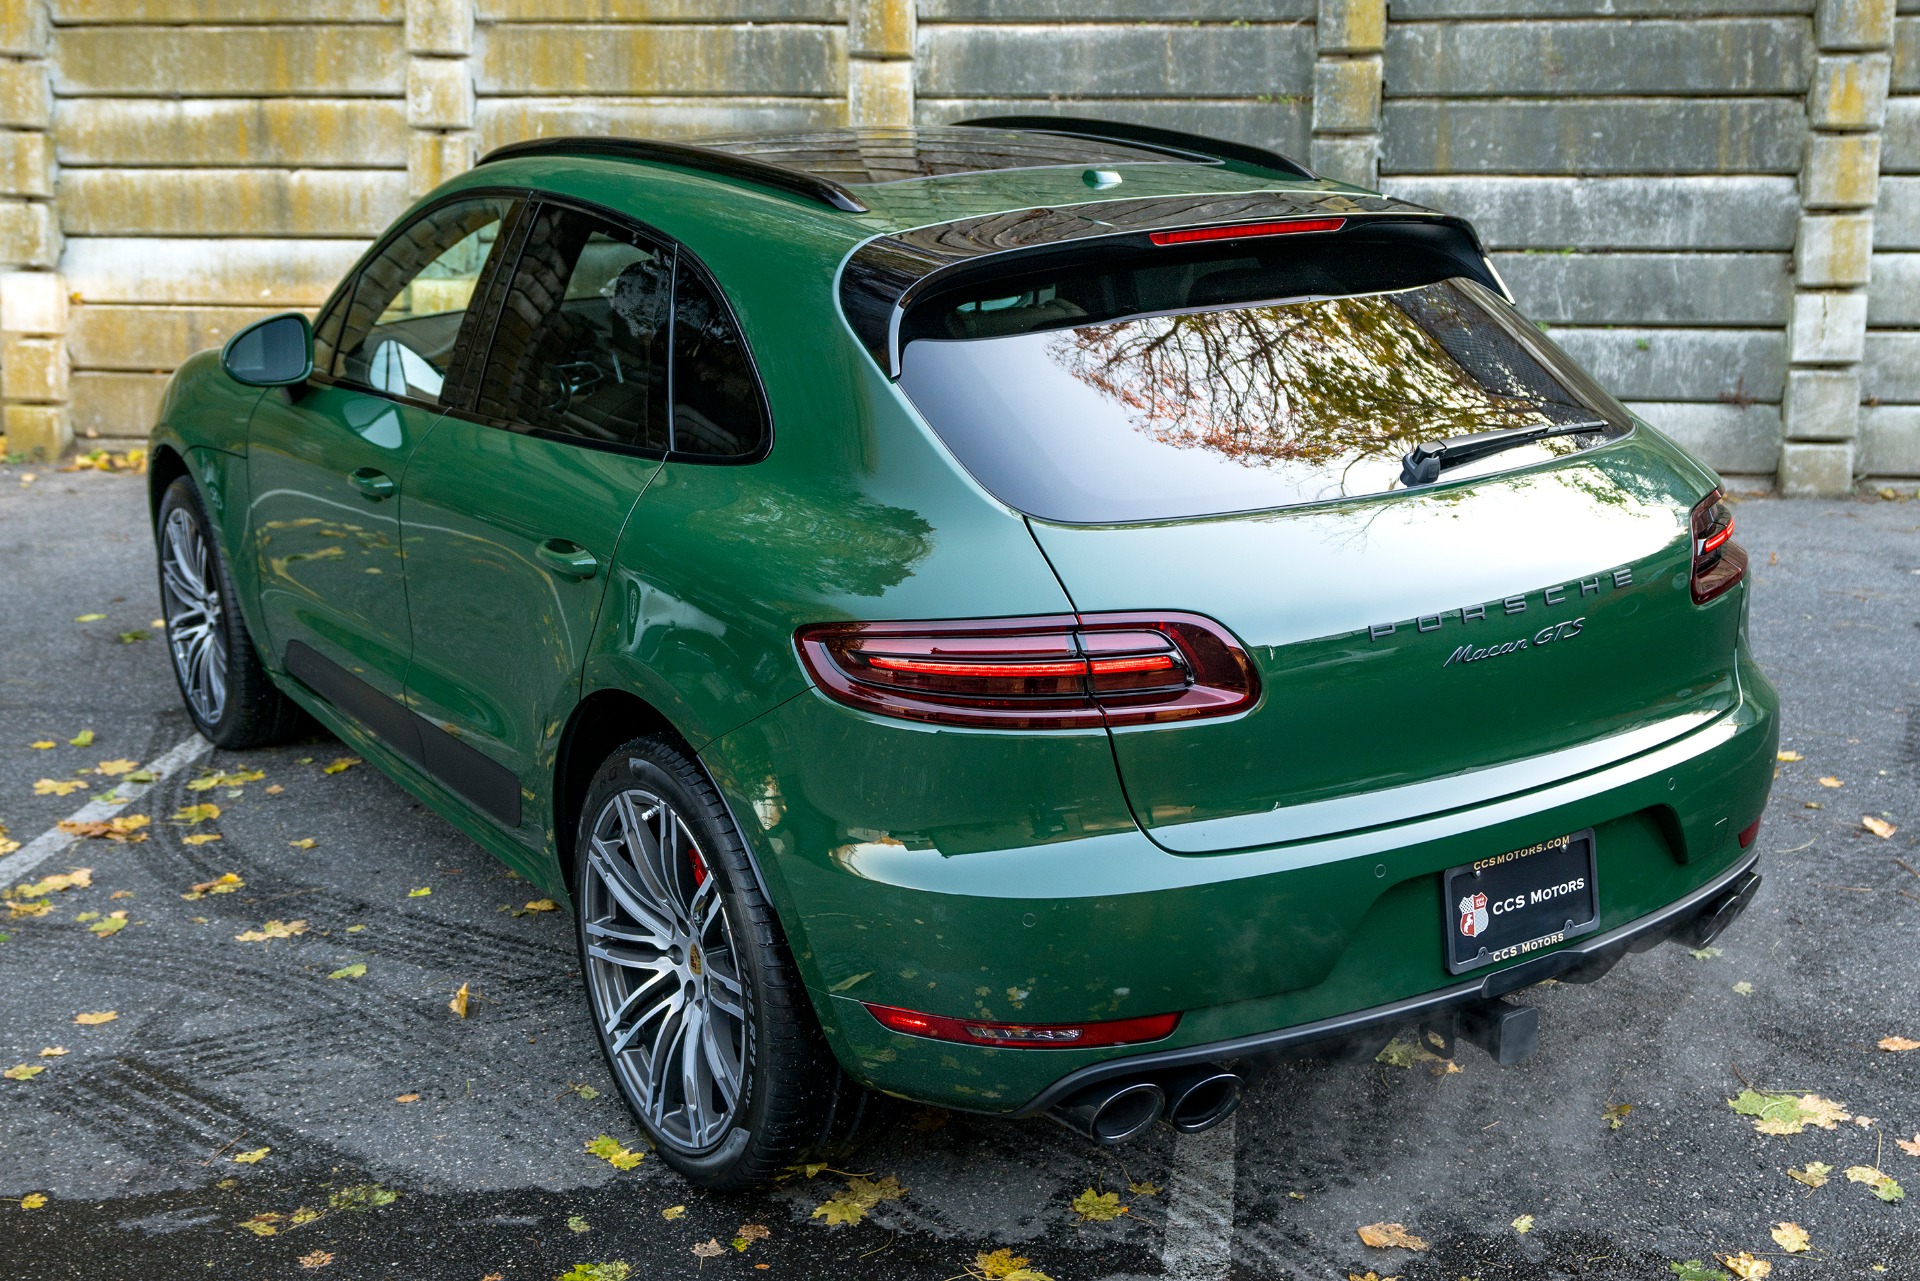 Цвета осень макан. Porsche Macan зеленый. Порше Макан GTS 2016 зеленый. Порше Макан болотного цвета. Viper Green цвет.